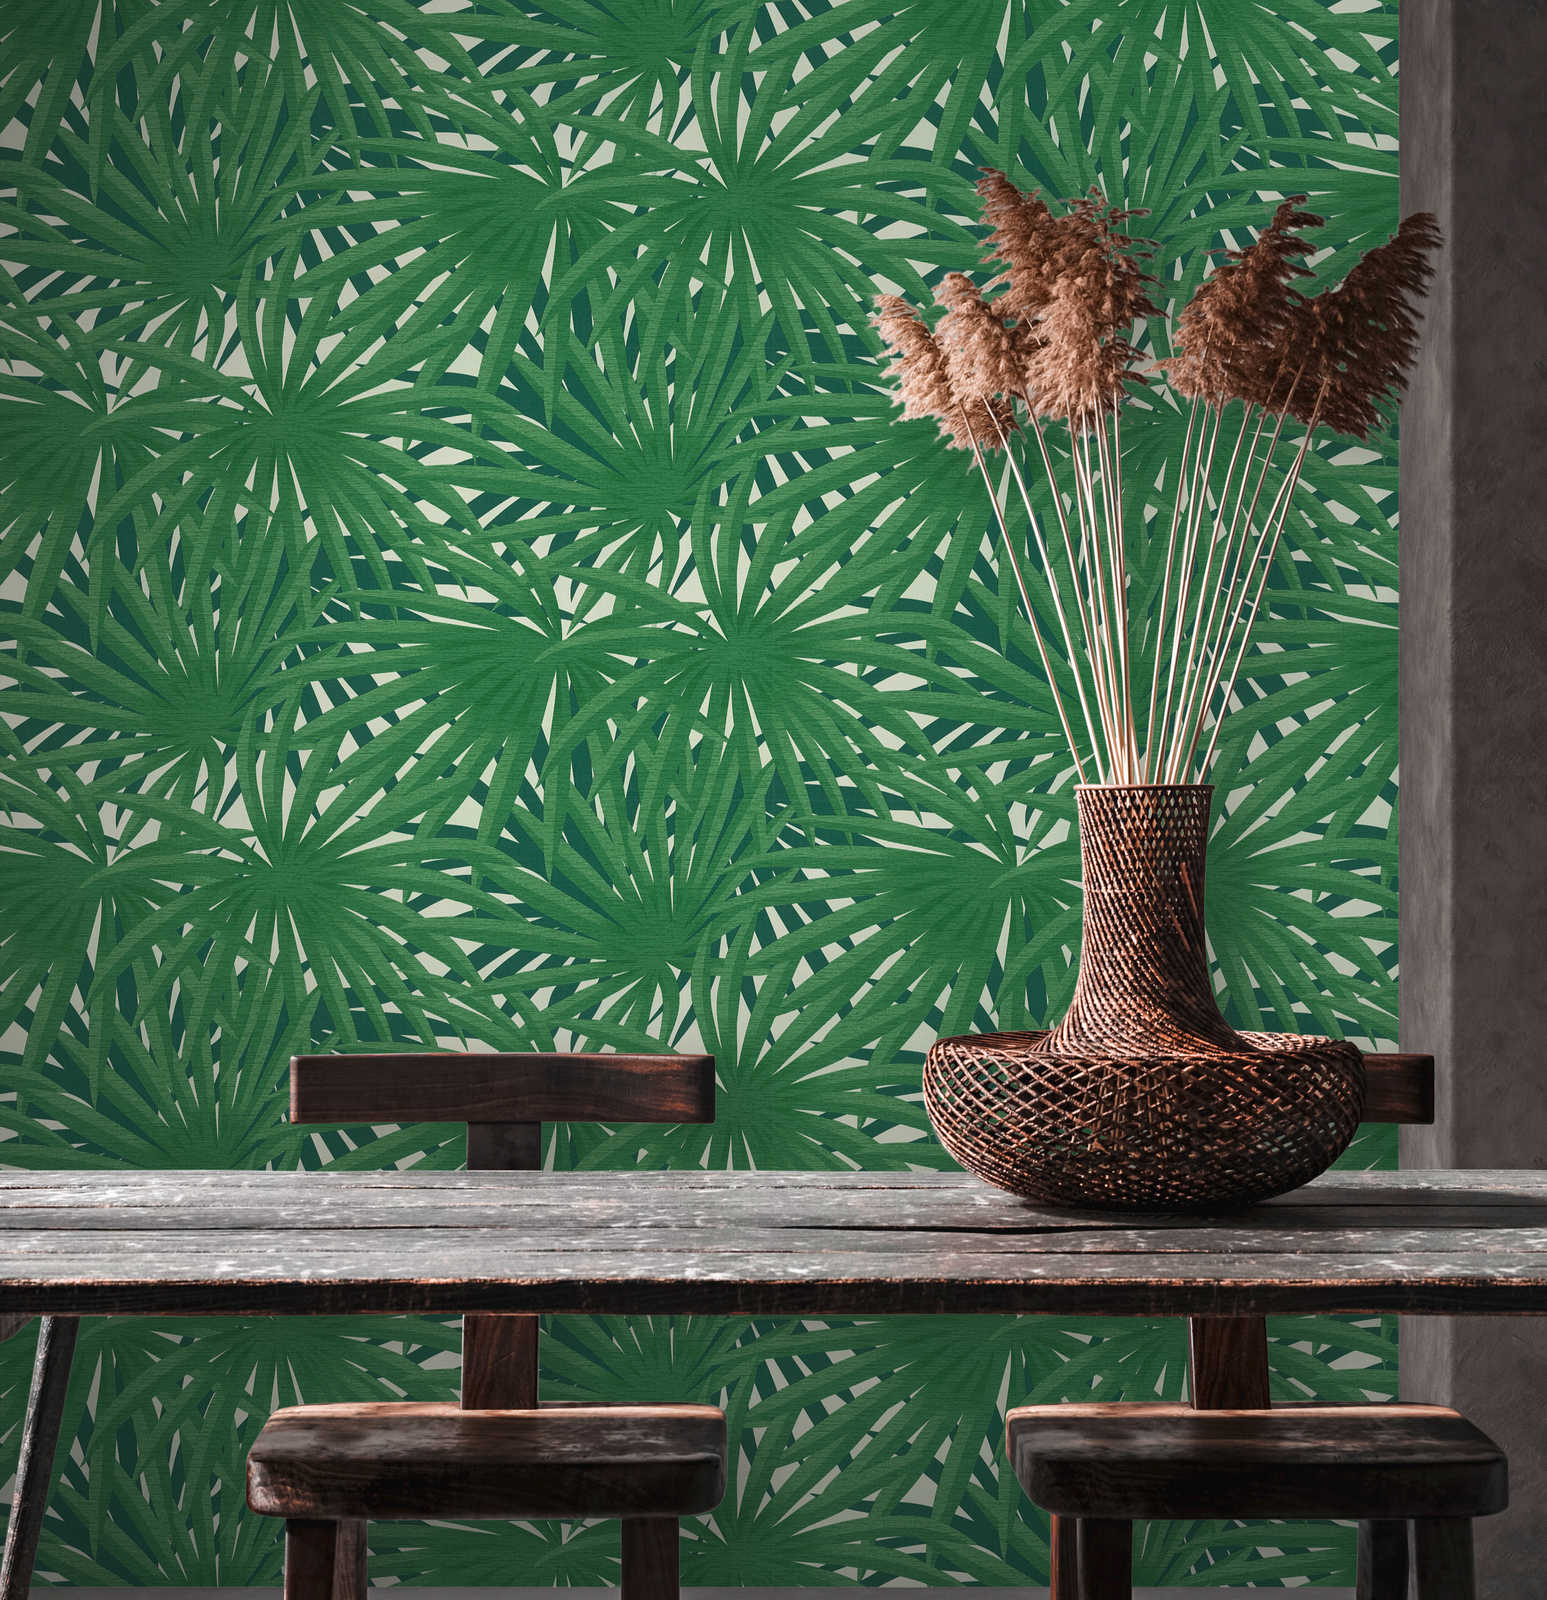             Tropical wallpaper with jungle design & metallic luster - green, metallic, white
        